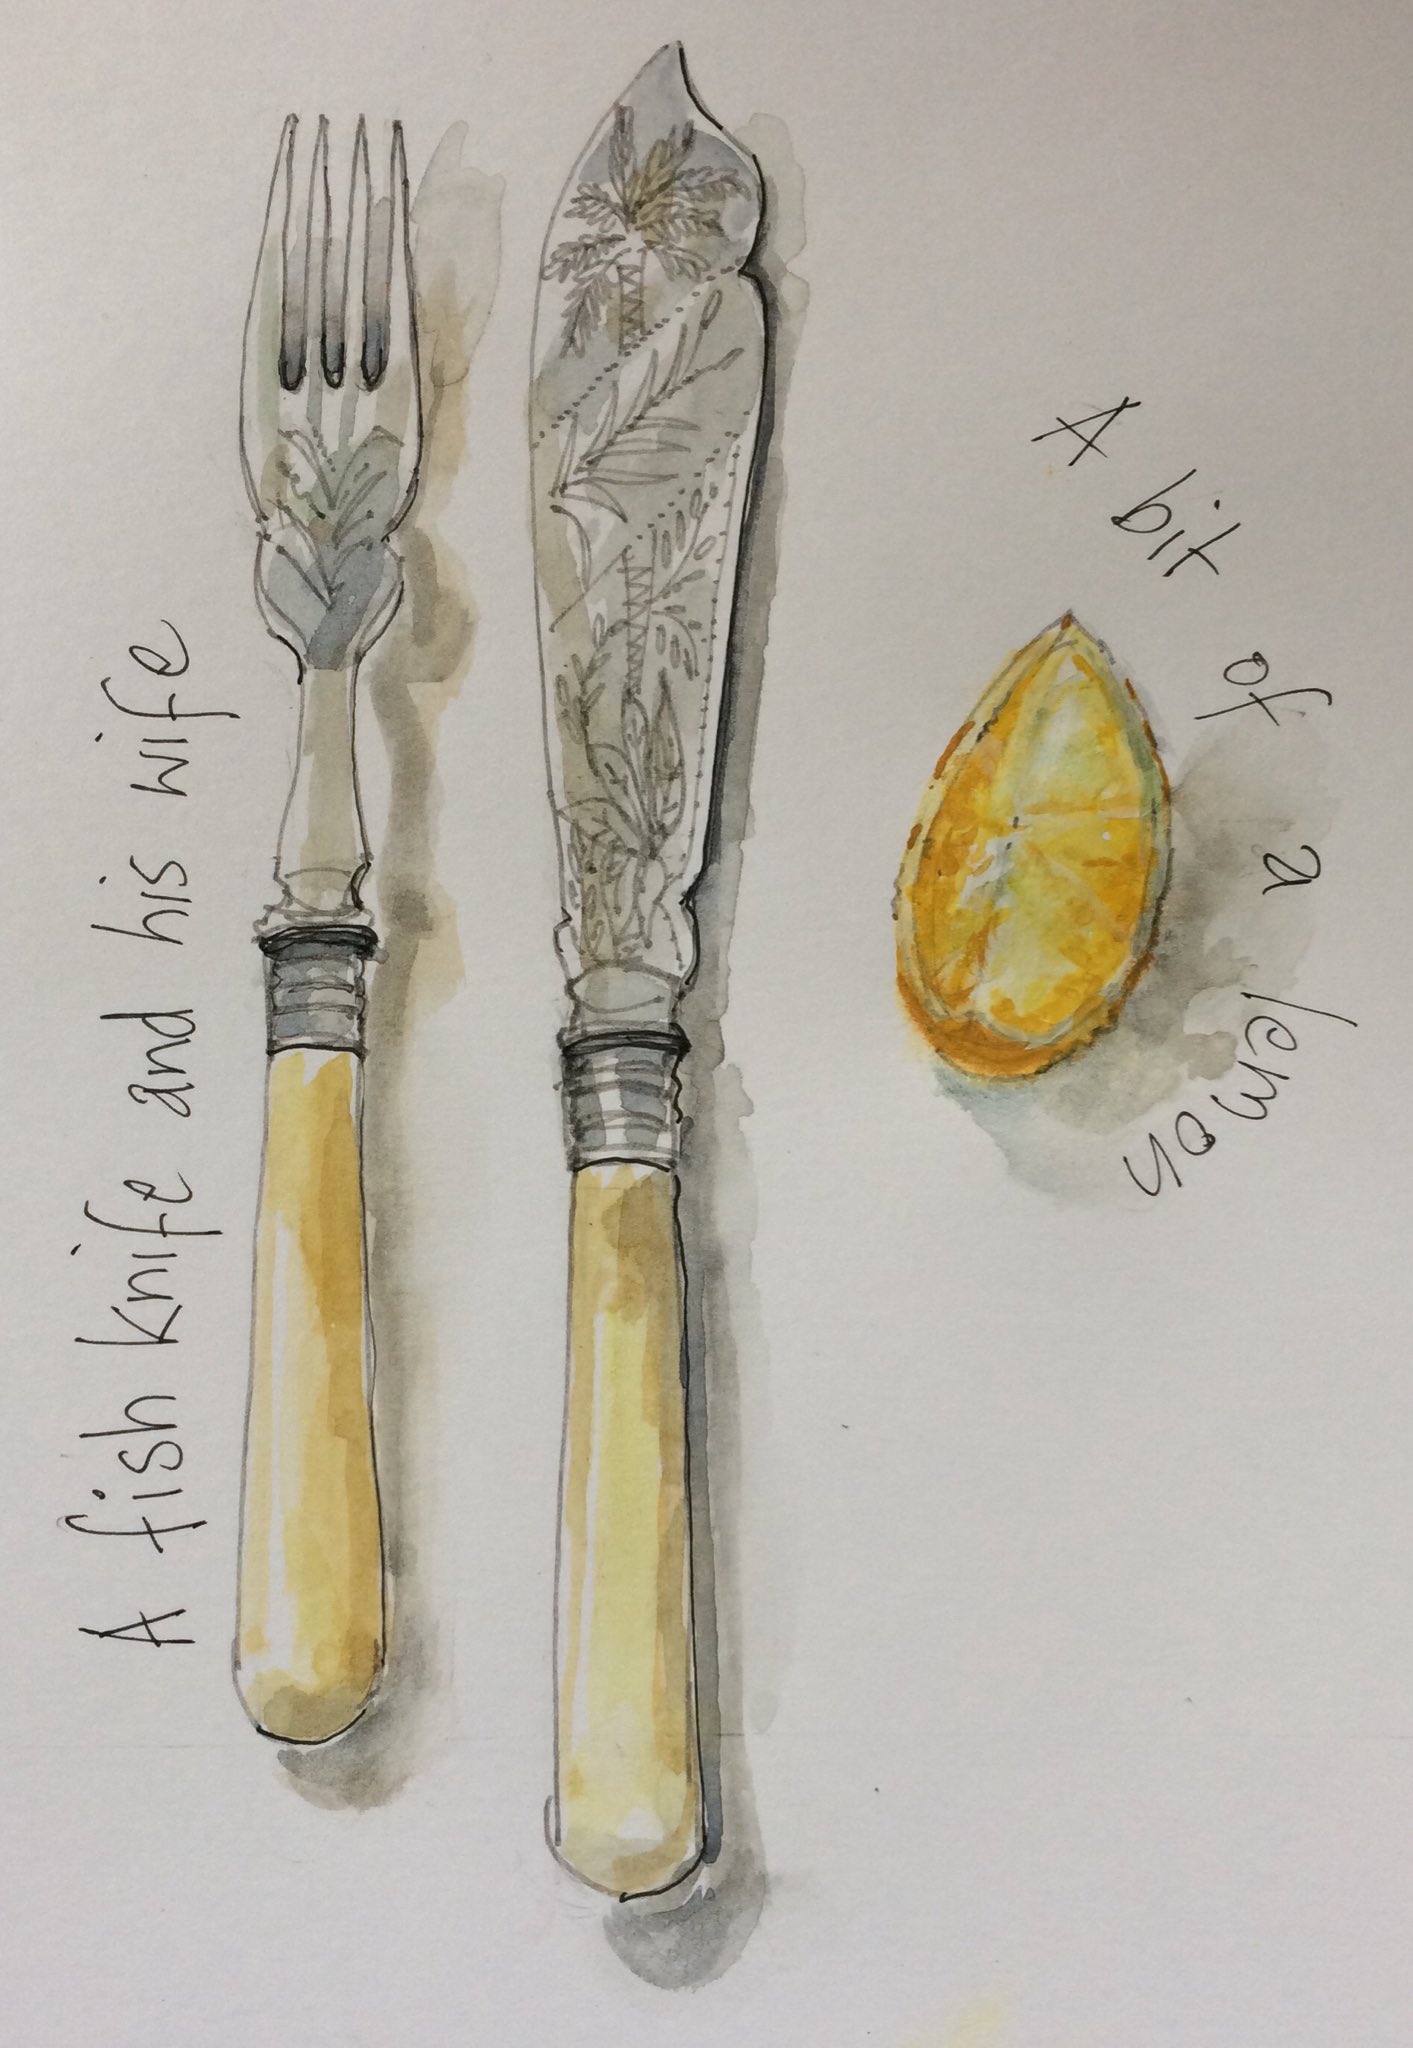 margaret irving miller on X: cutlery#antique#illustrate#sketch#draw #smile#watercolour#ink#knifeandfork#fish#food#presentation#art#words   / X